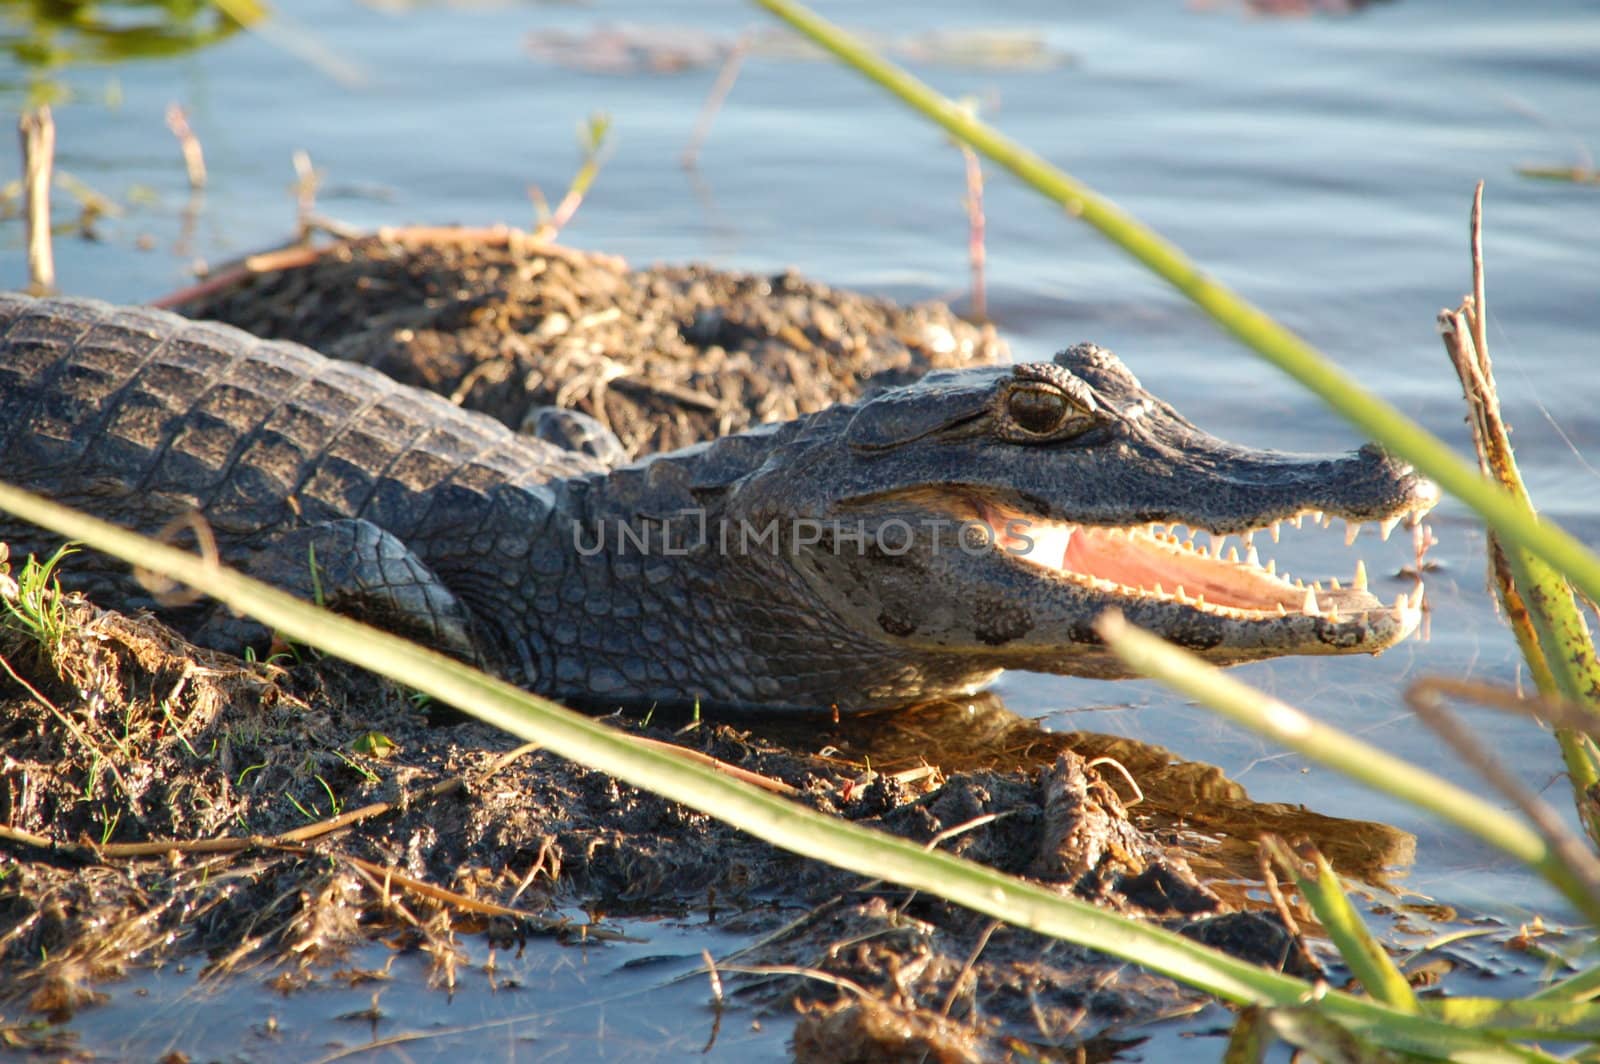 Crocodile in Marshland by cosmopol